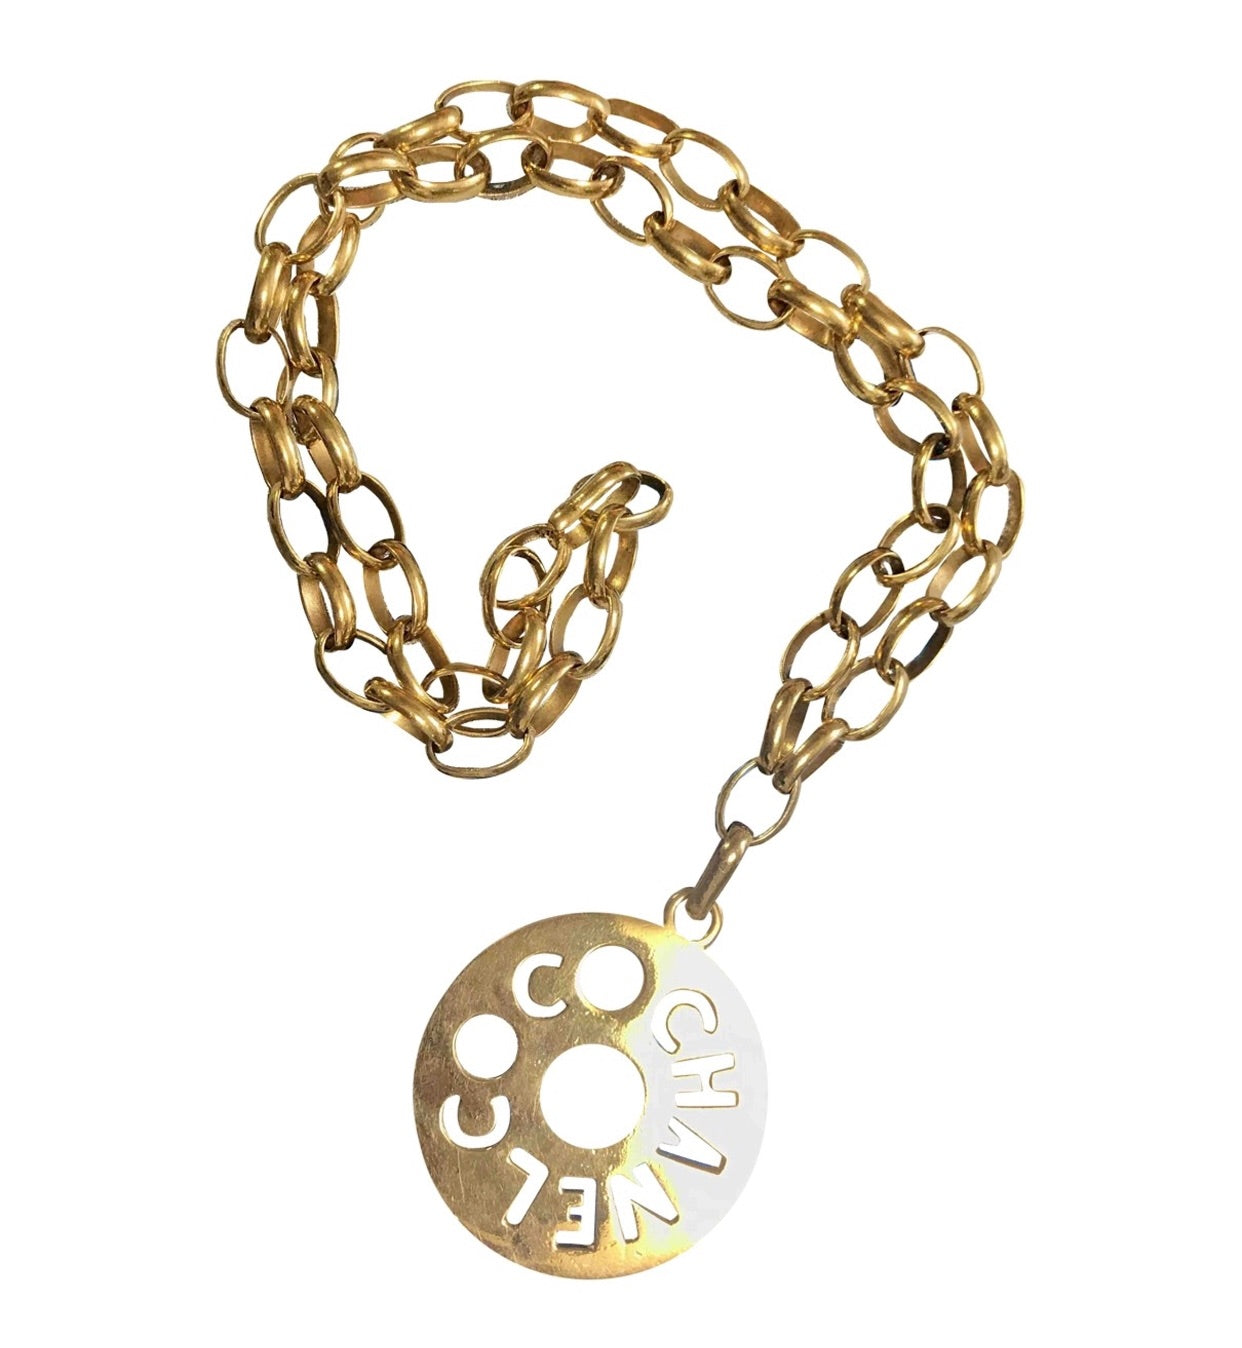 Vintage CHANEL golden chain necklace, chain belt with round logo